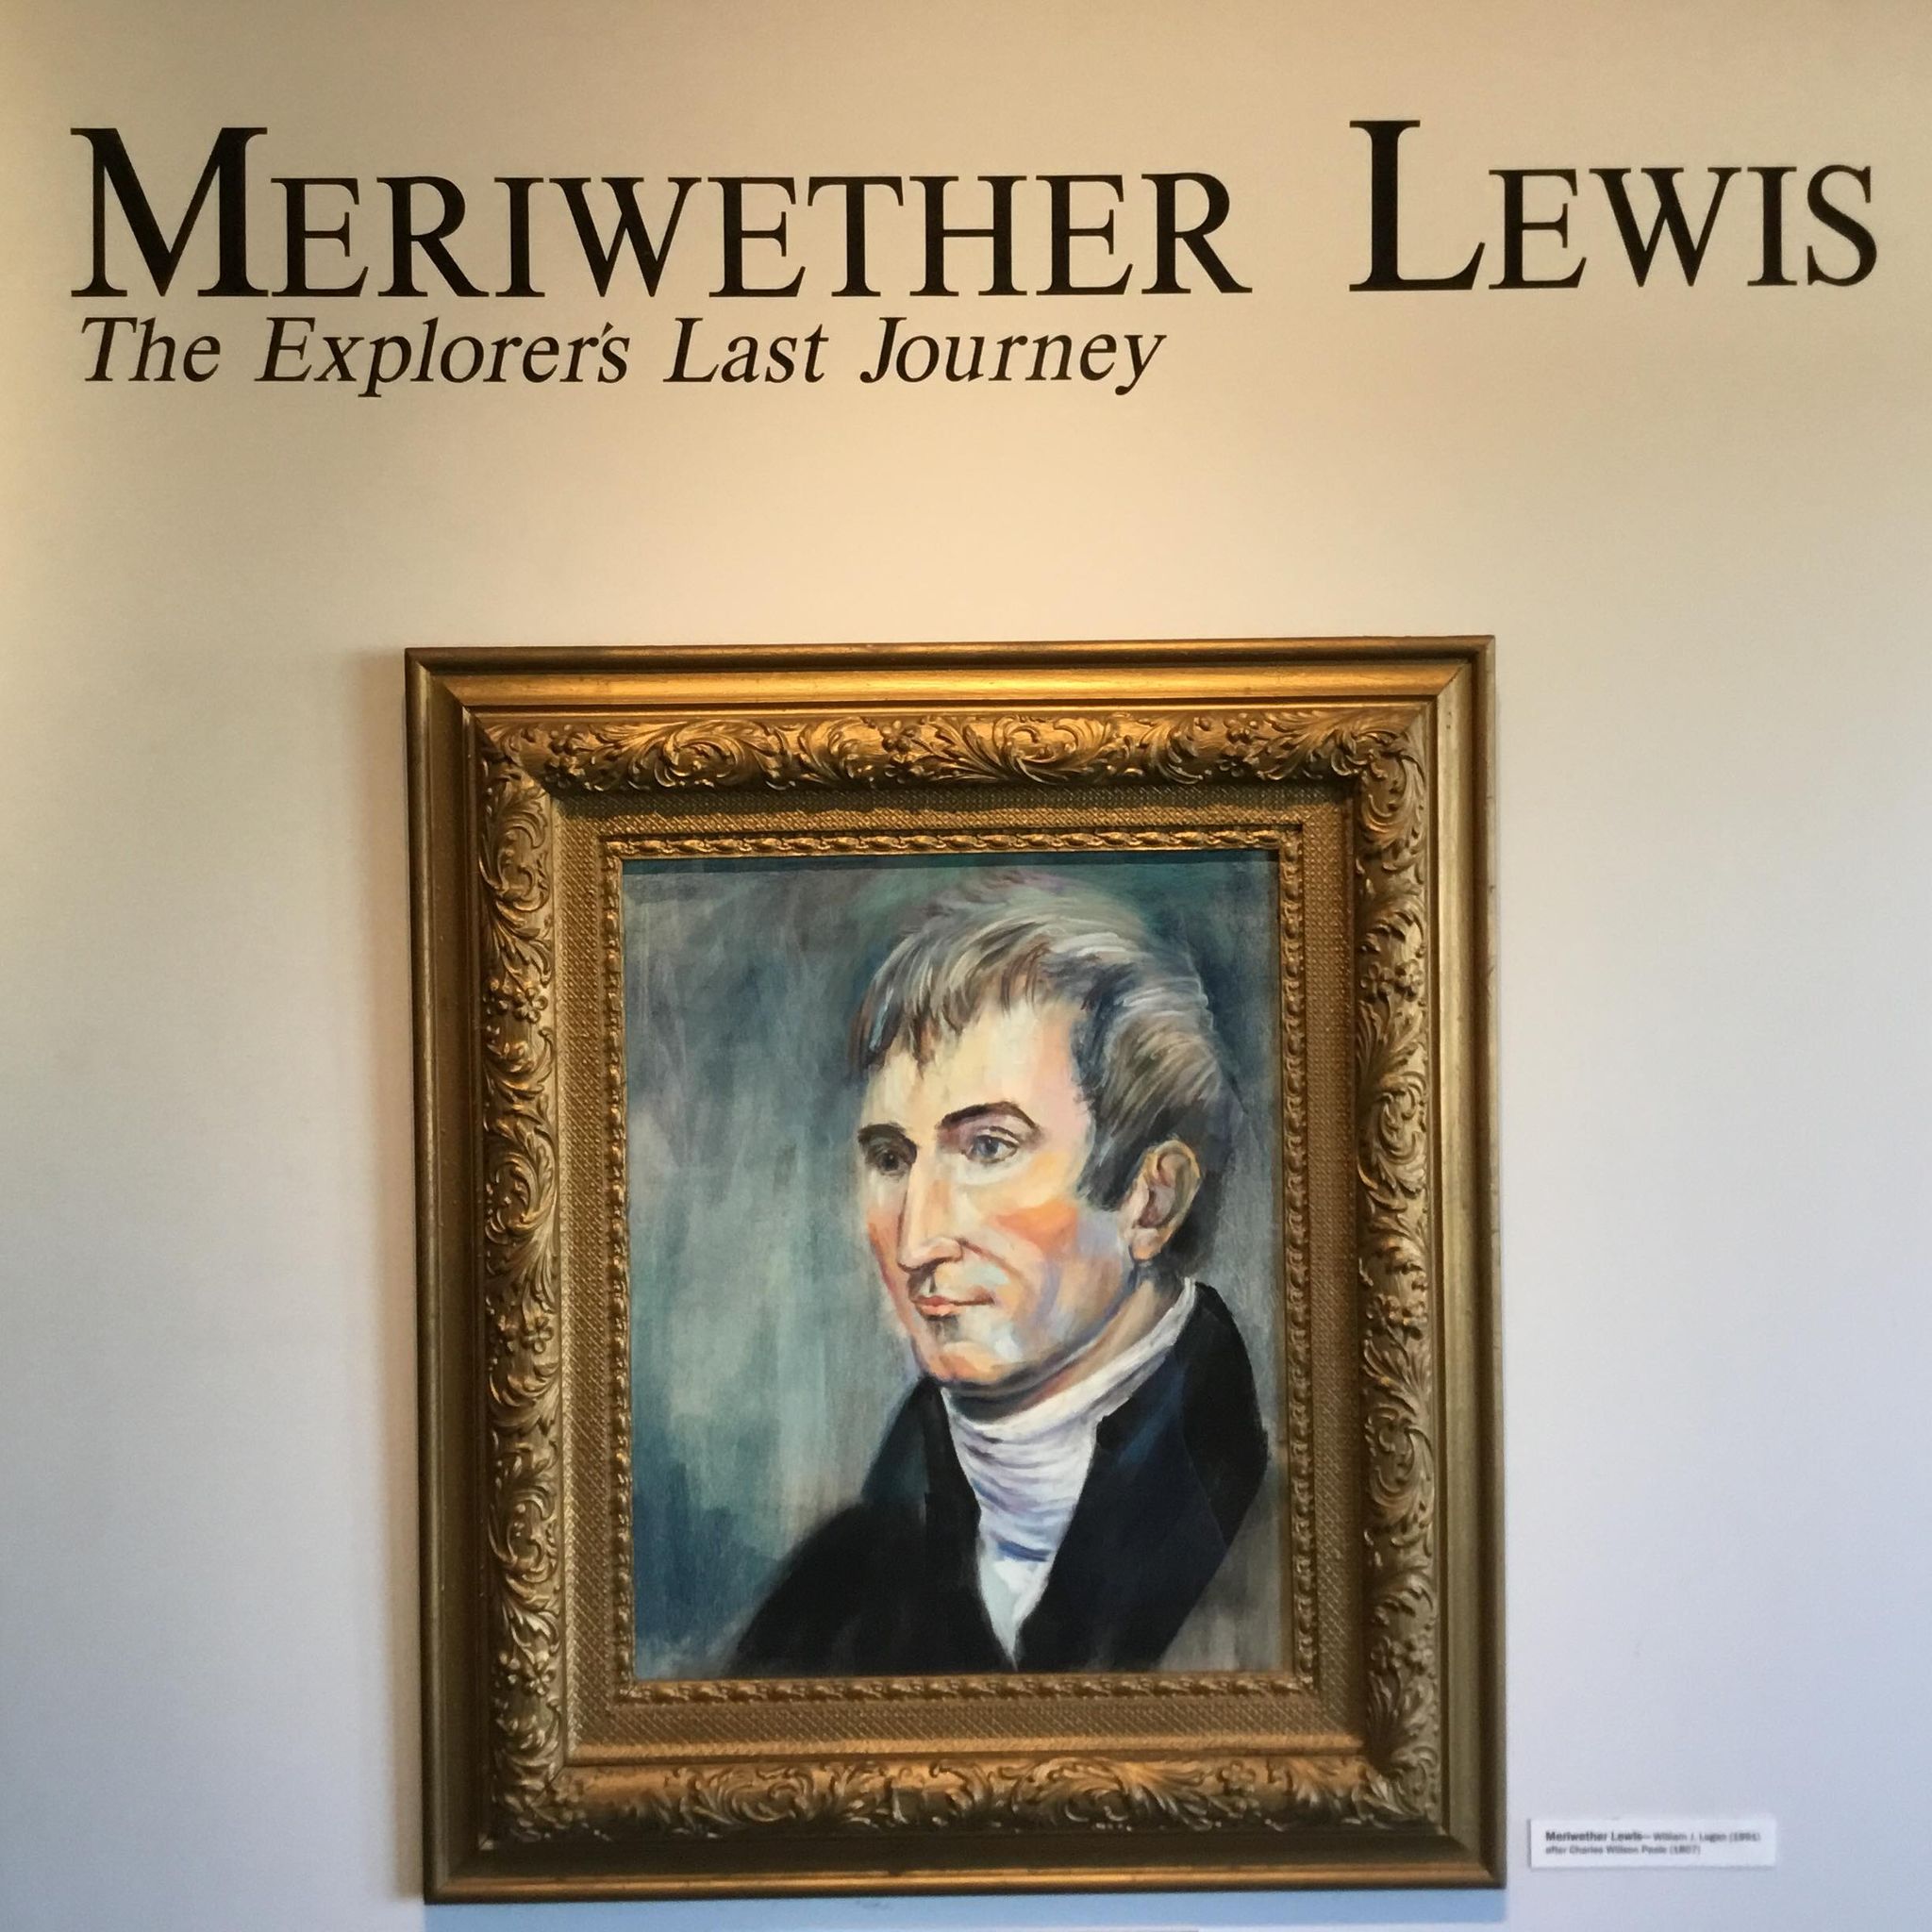 Meriwether Lewis portrait by William J. Logan (after Charles Wilson Peale)